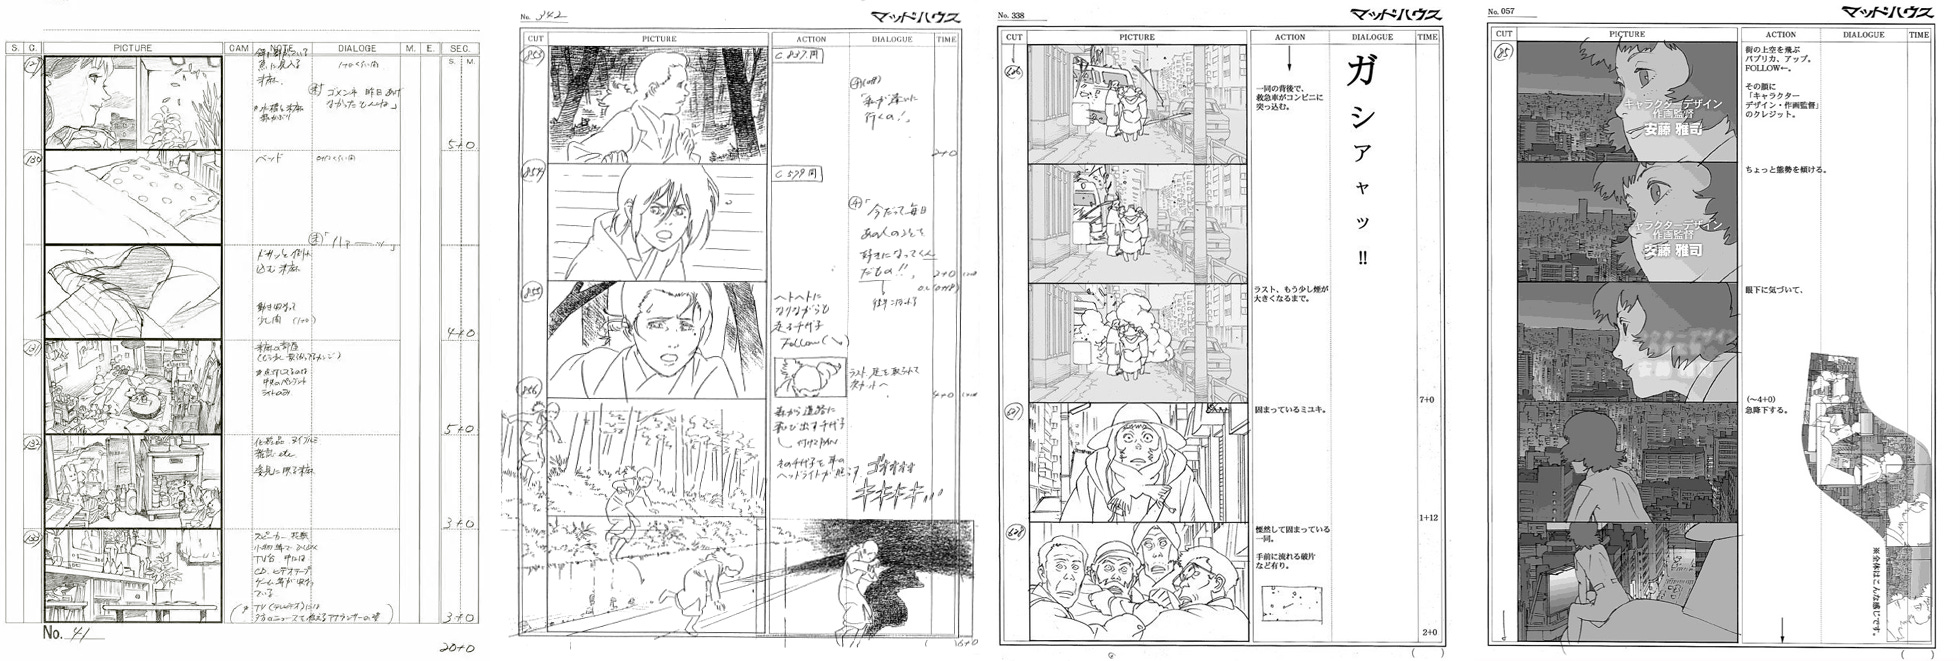 Higehiro; storyboard